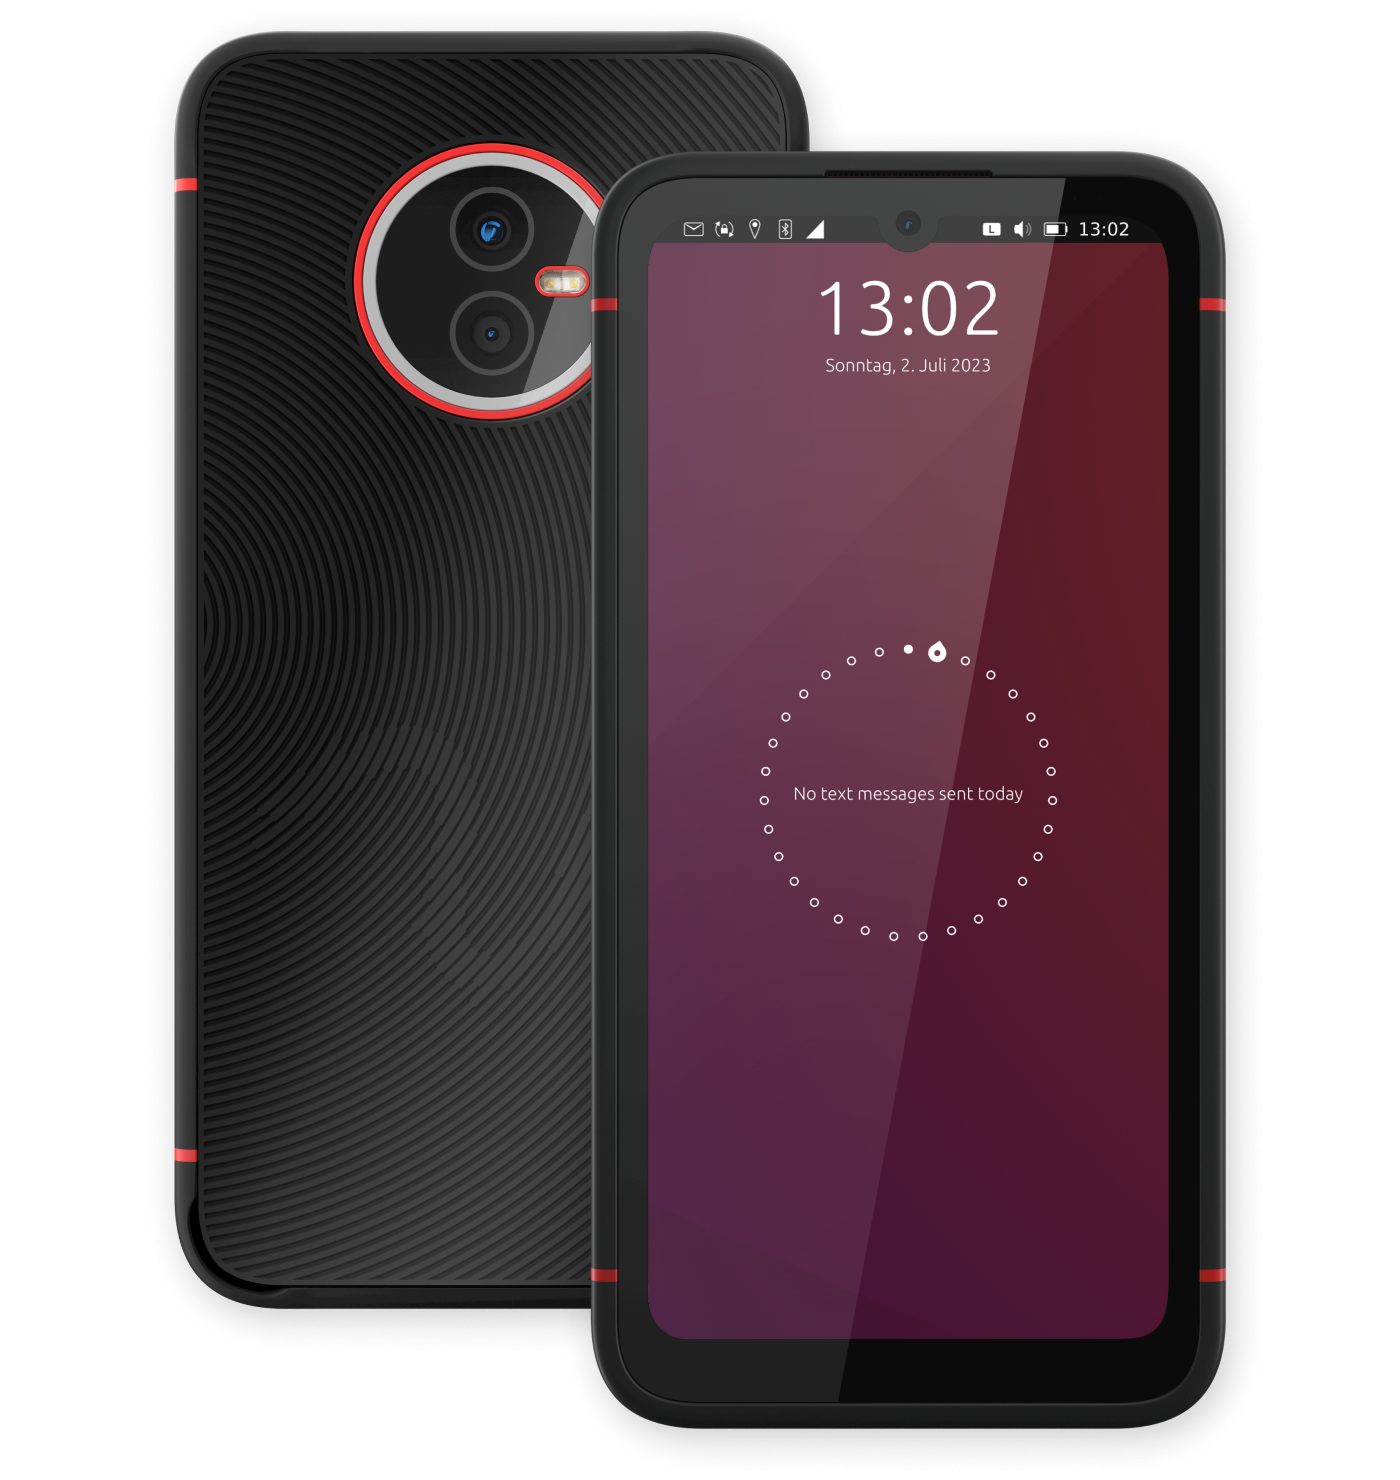 mit Smartphone X23 – Phone Touch Volla Ubuntu